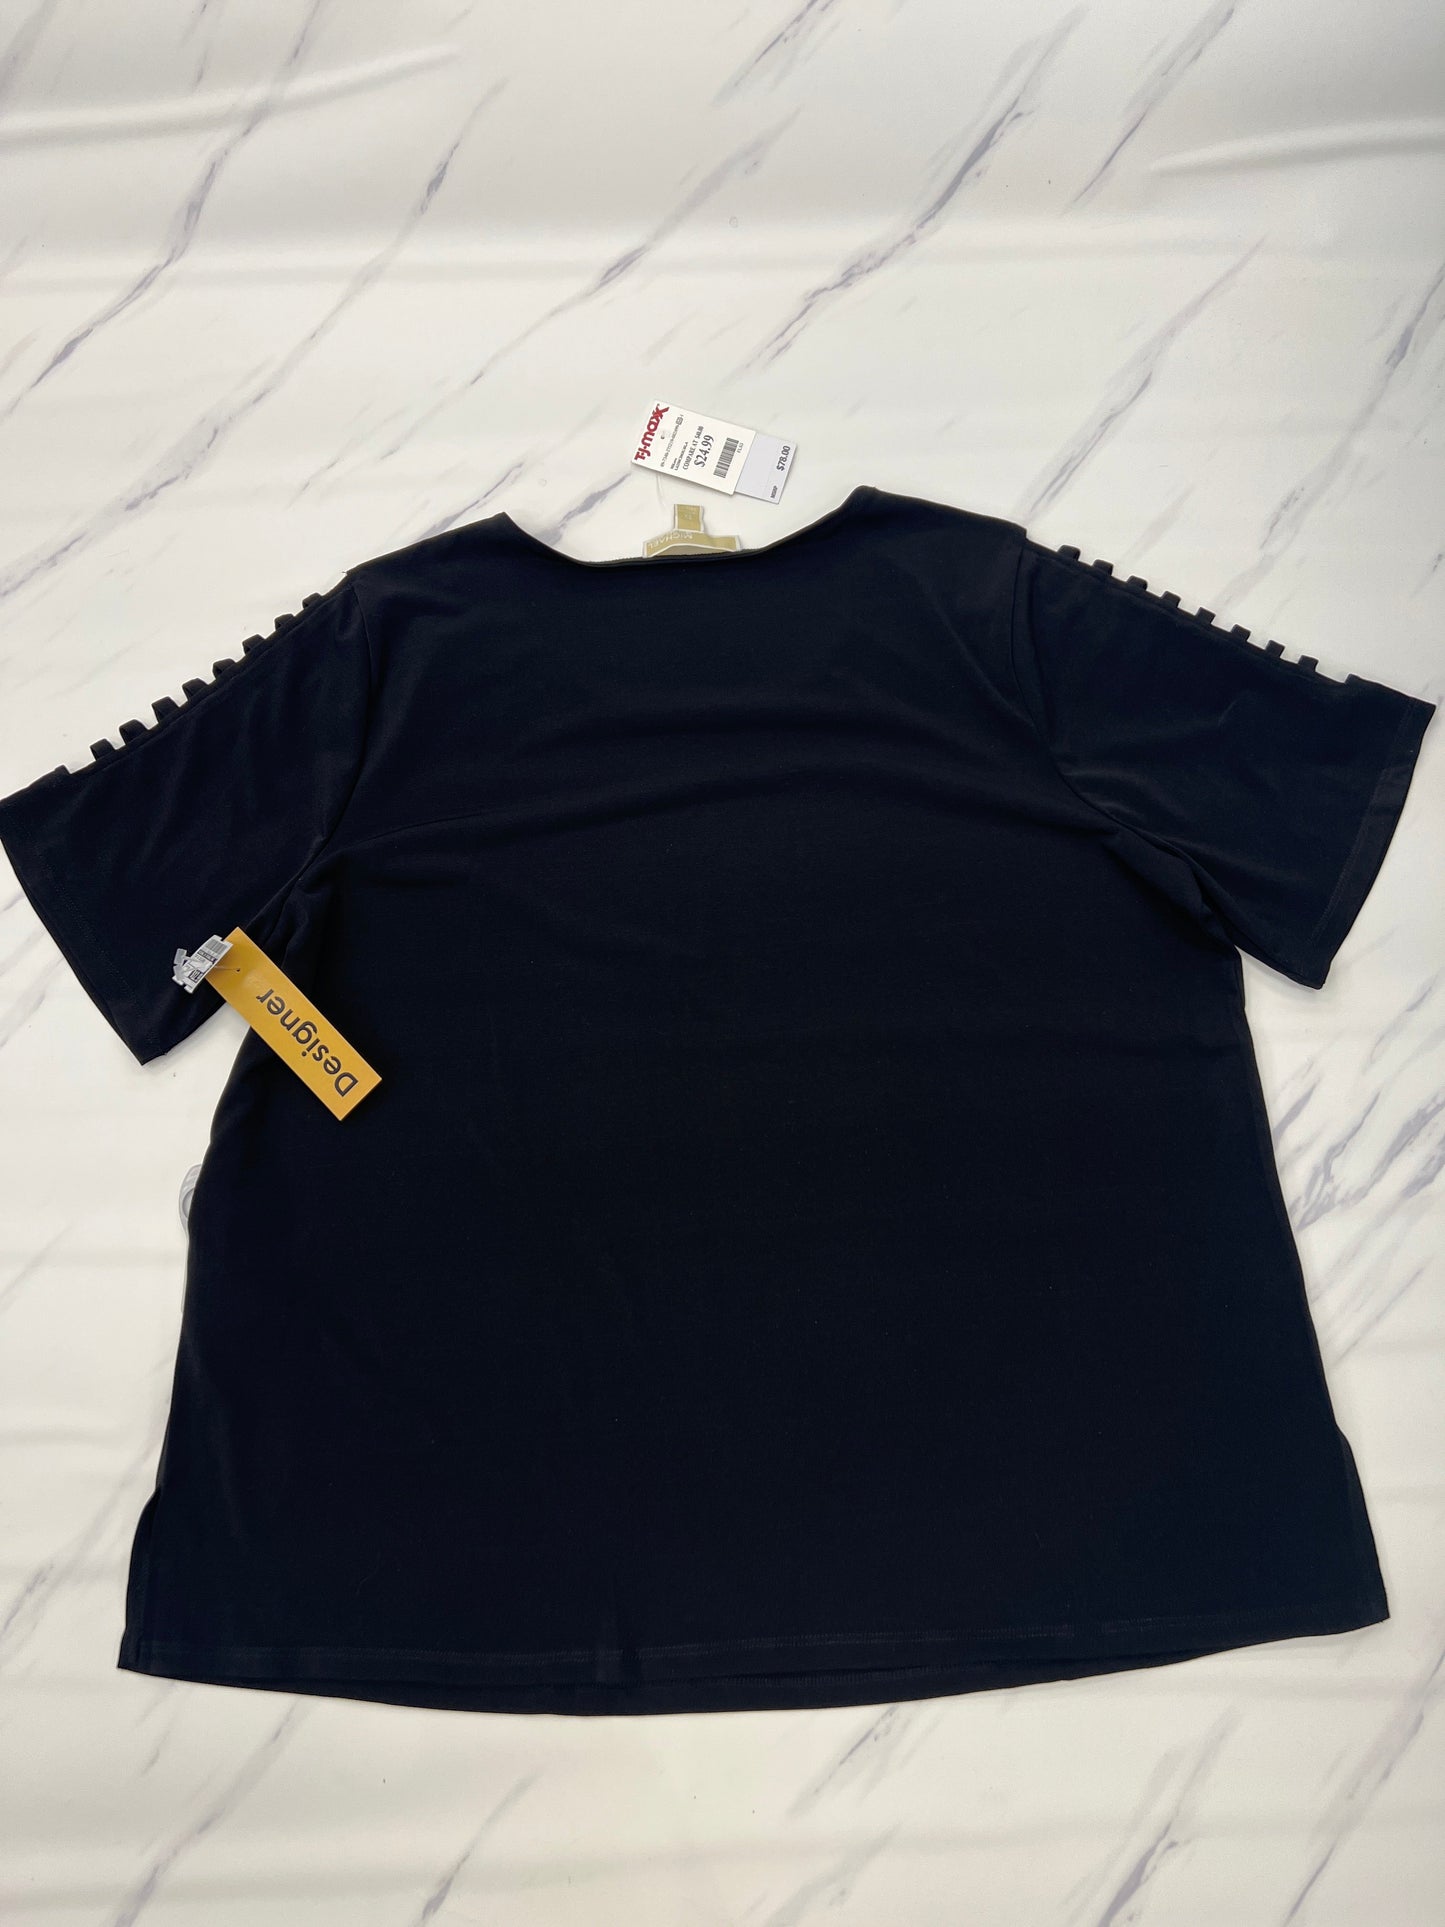 Black Top Short Sleeve Designer Michael By Michael Kors, Size 2x